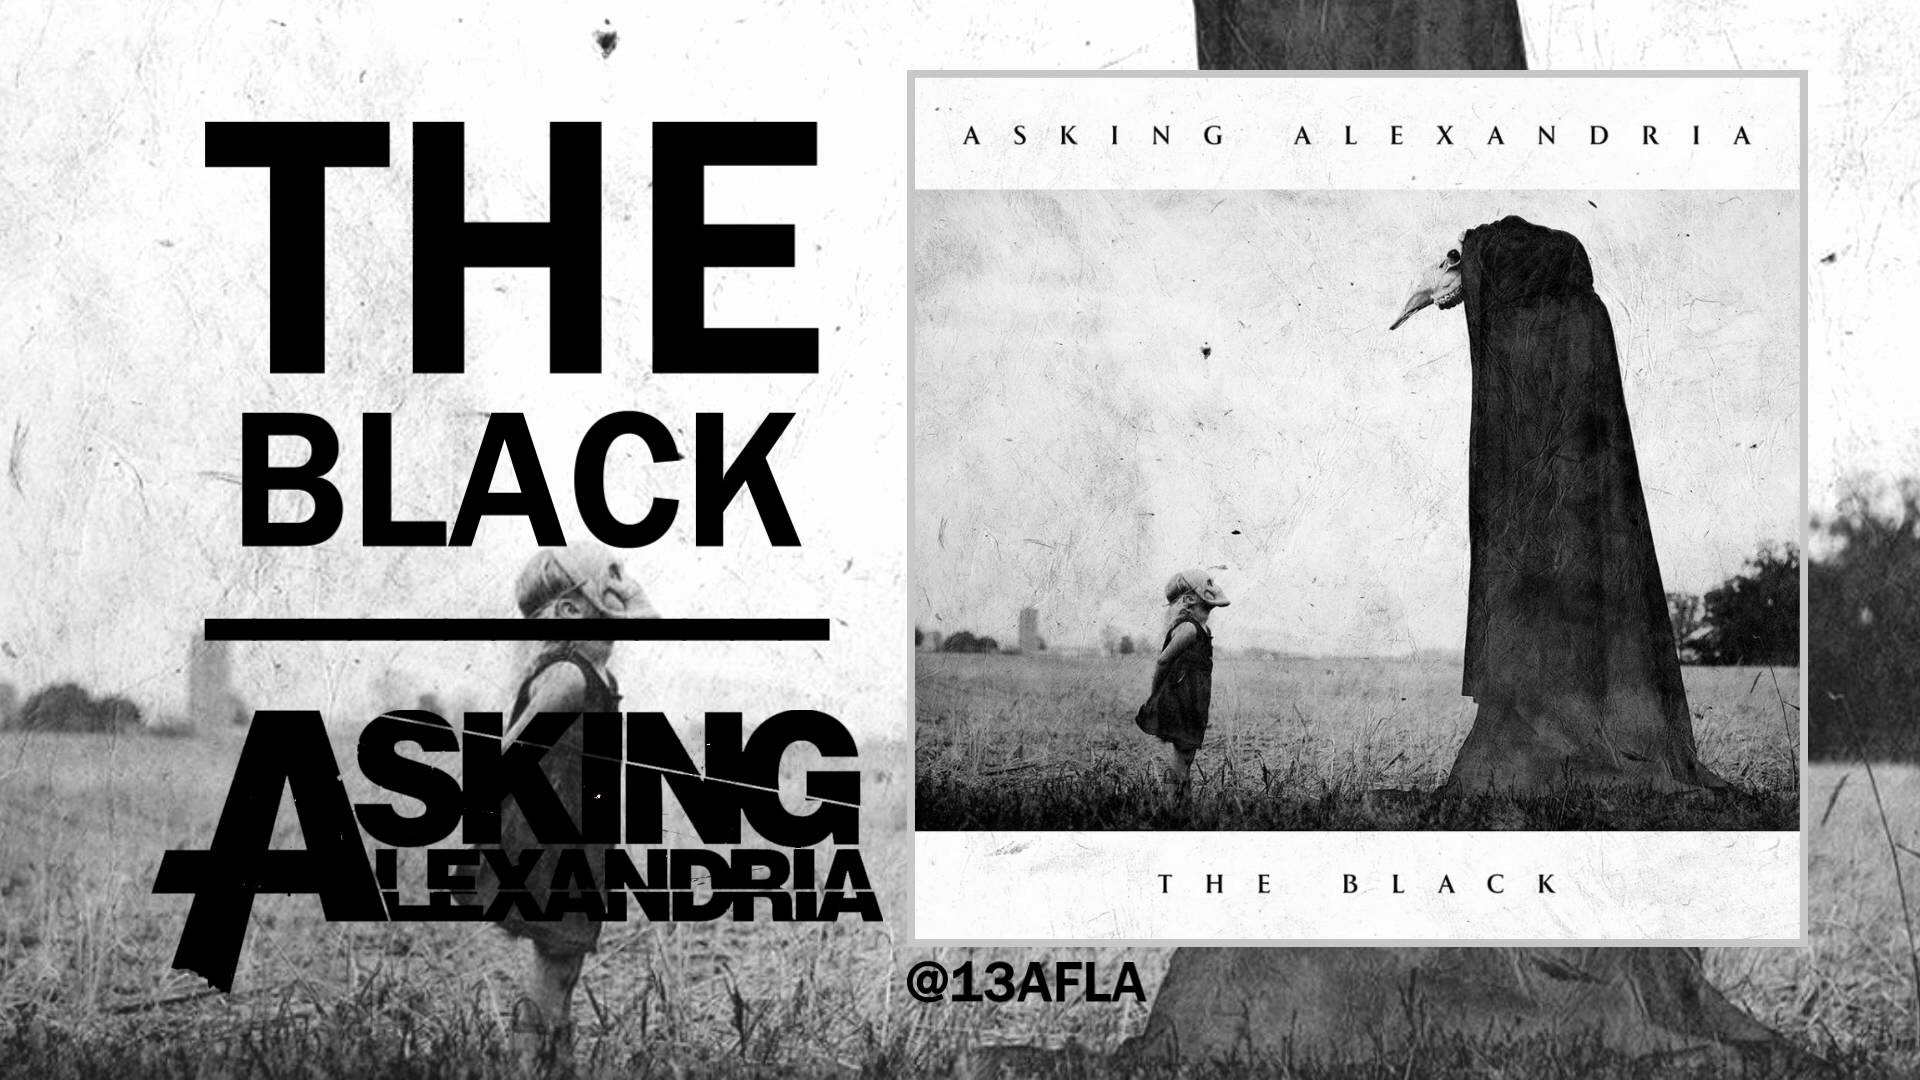 Asking Alexandria Black (2016 Album Preview)